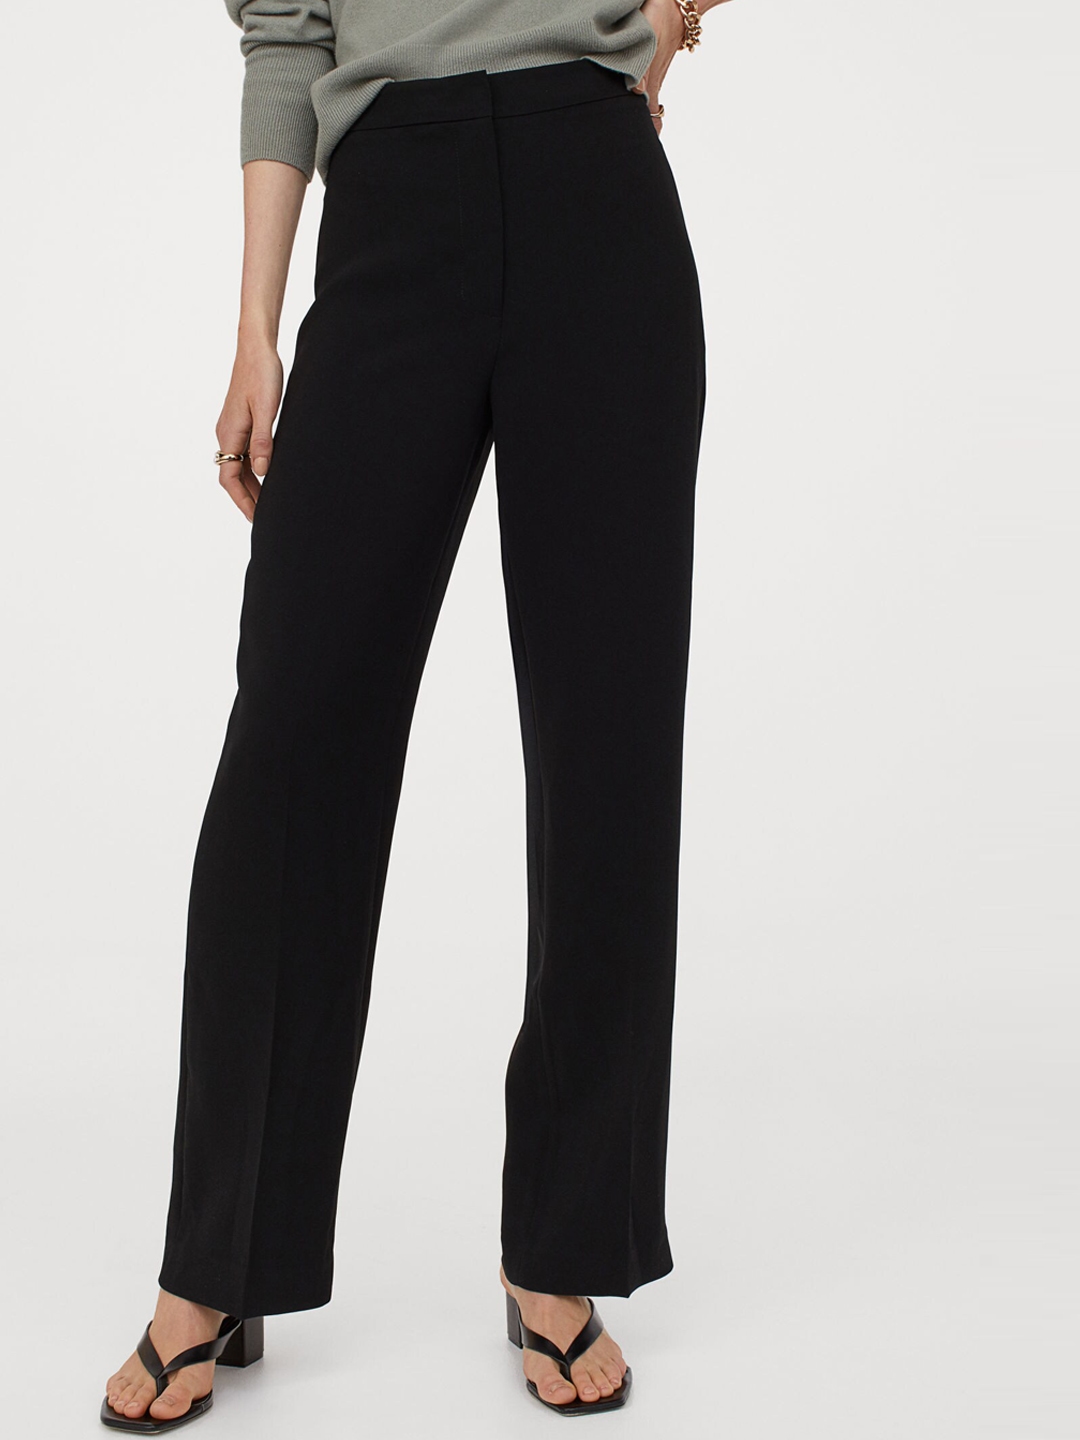 Buy Black Trousers & Pants for Men by Theme - Nice N Easy Online | Ajio.com